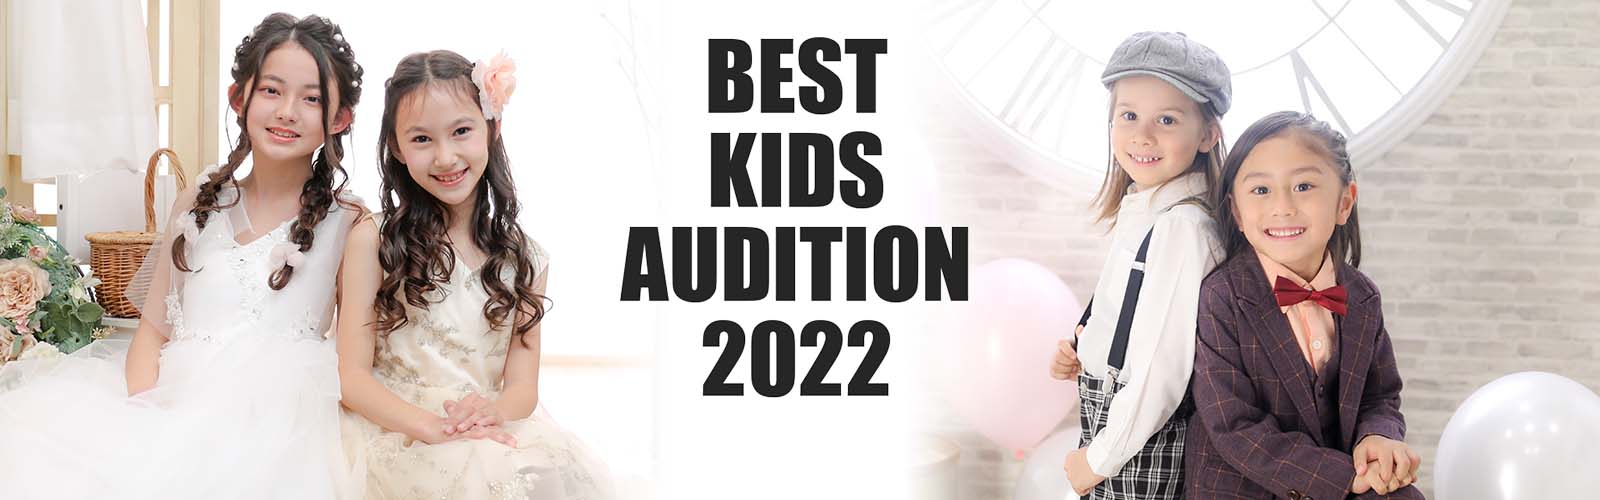 BEST KIDS AUDITION 2022